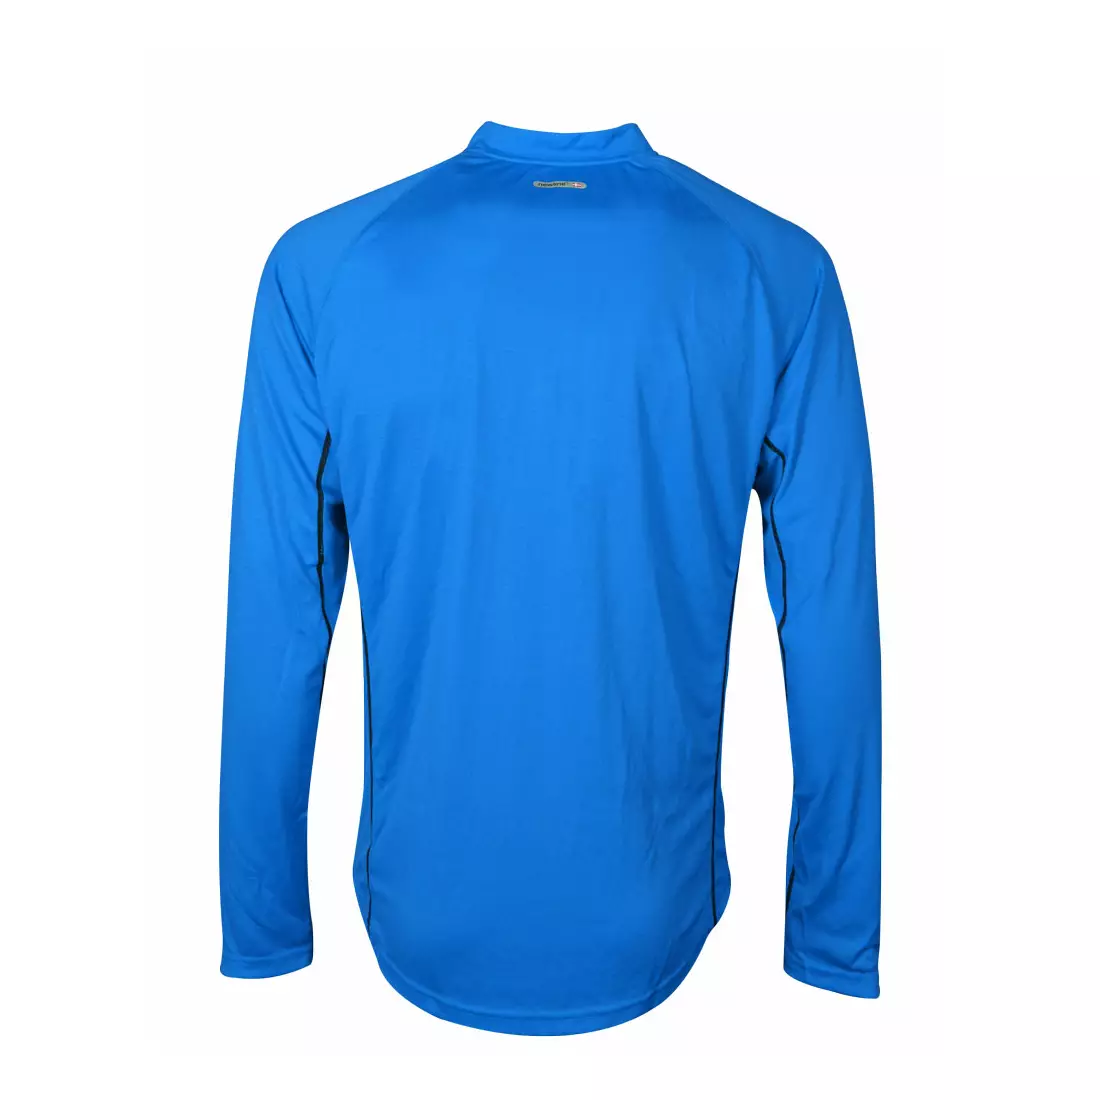 NEWLINE BASE ZIP SHIRT - pánské běžecké tričko D/R 14370-016